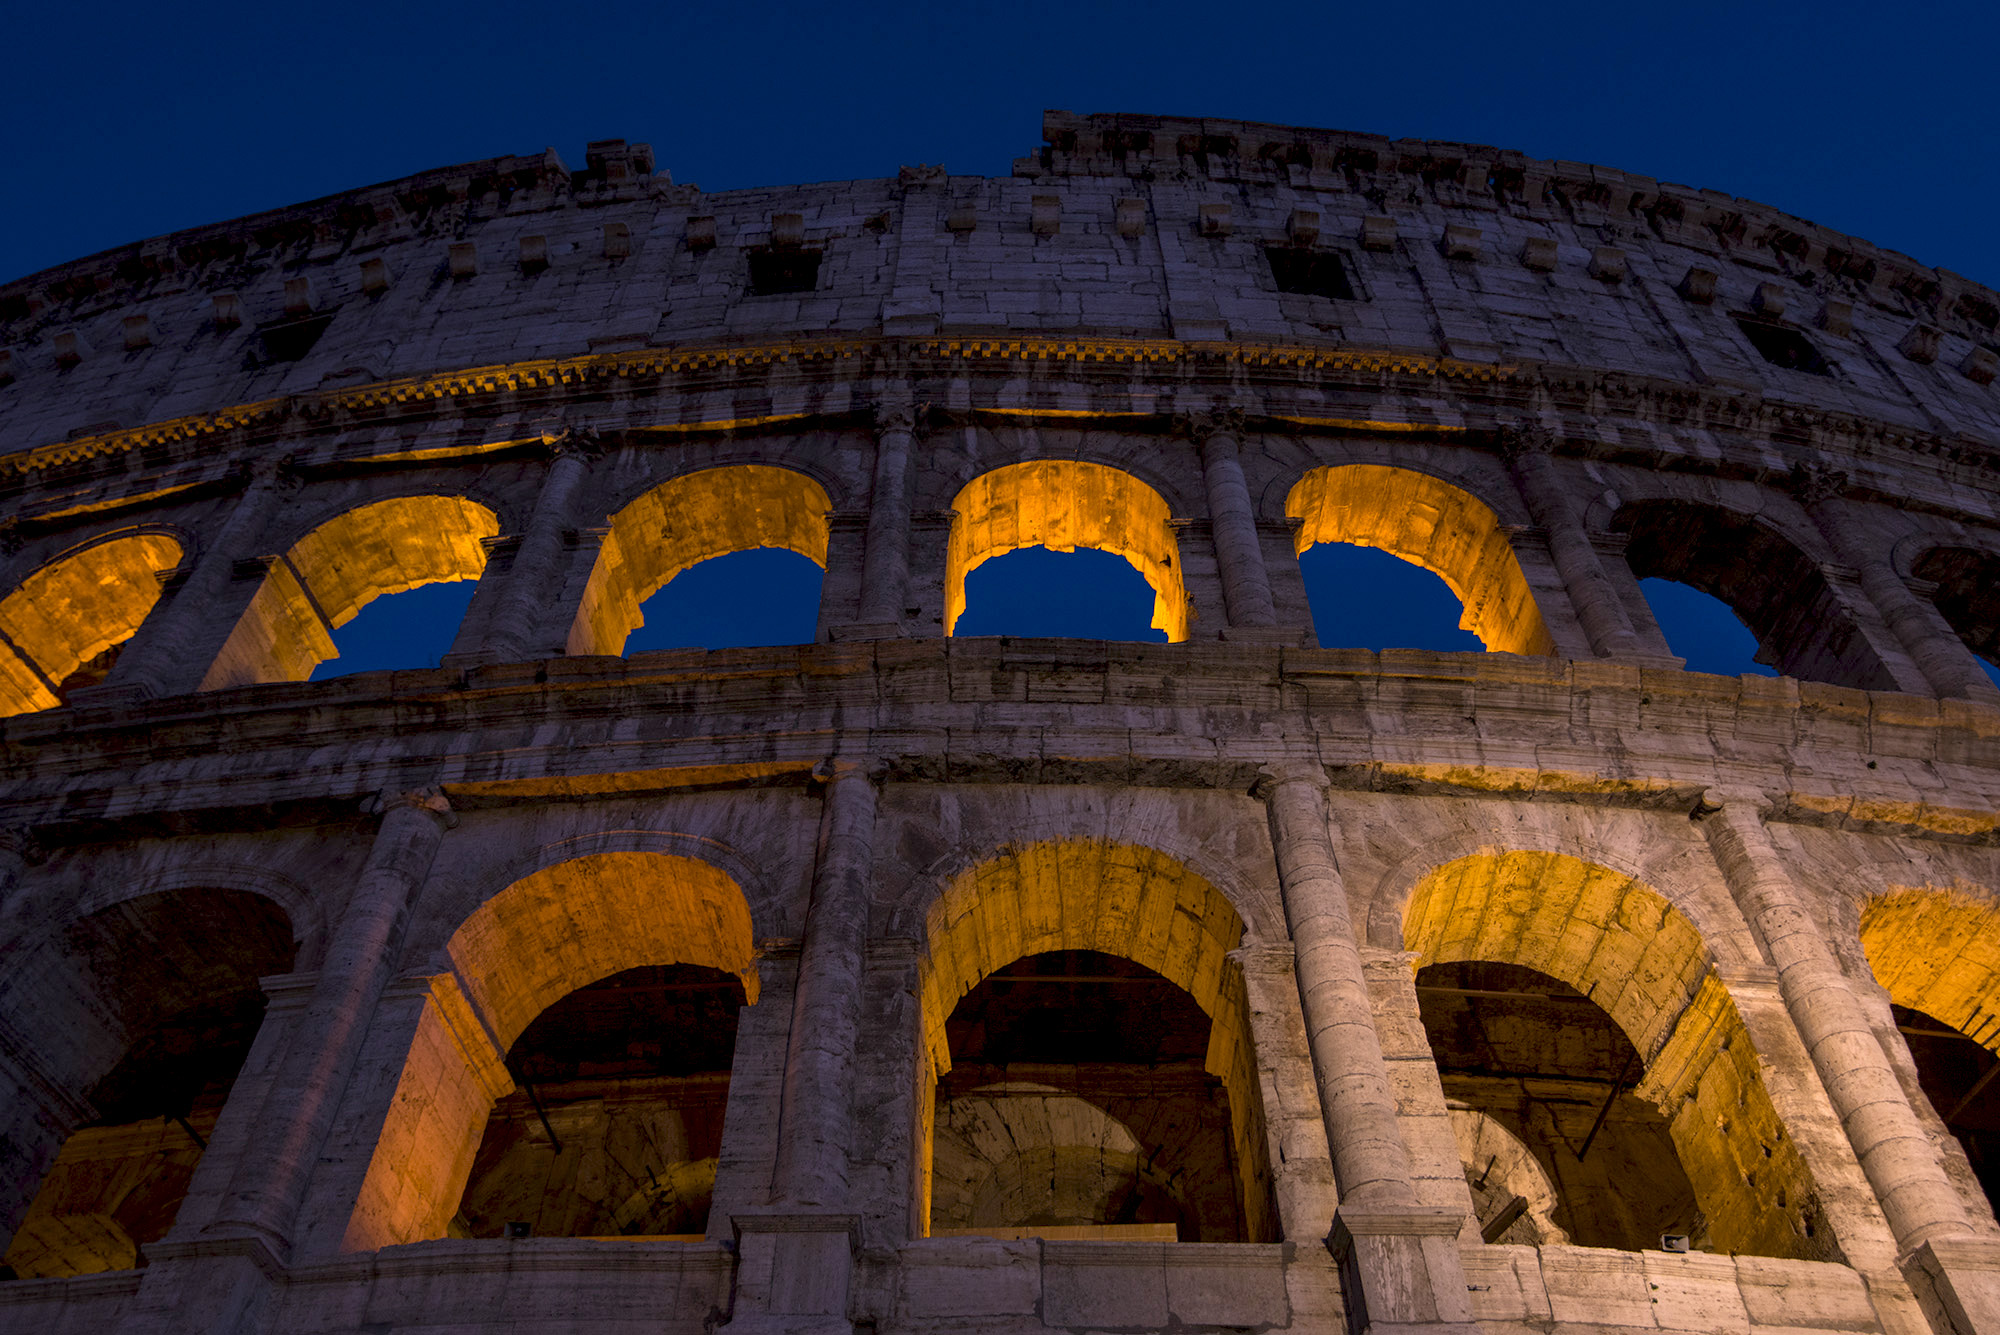 Colosseum at blue hour...